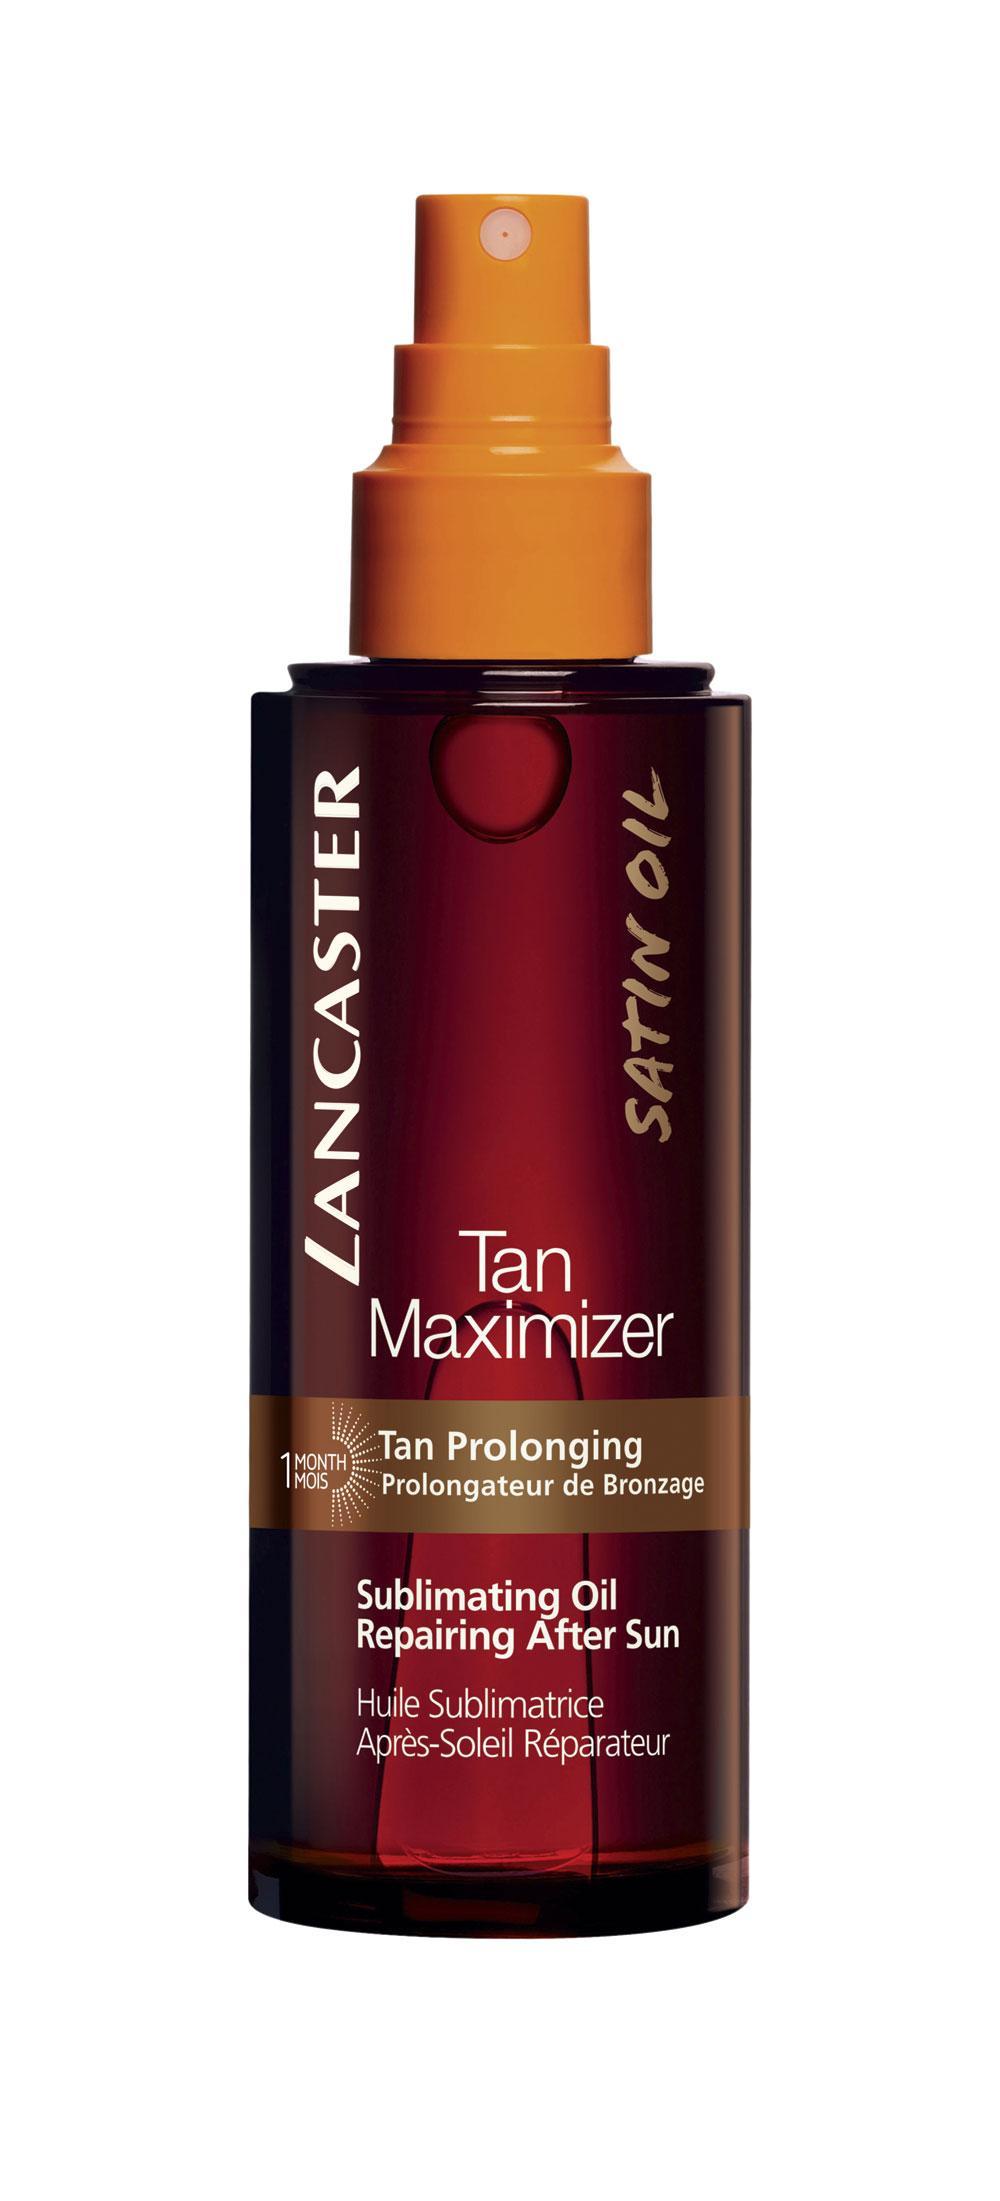 Tan Maximizer Sublimating Oil Repairing After Sun (30,90 euro), Lancaster.